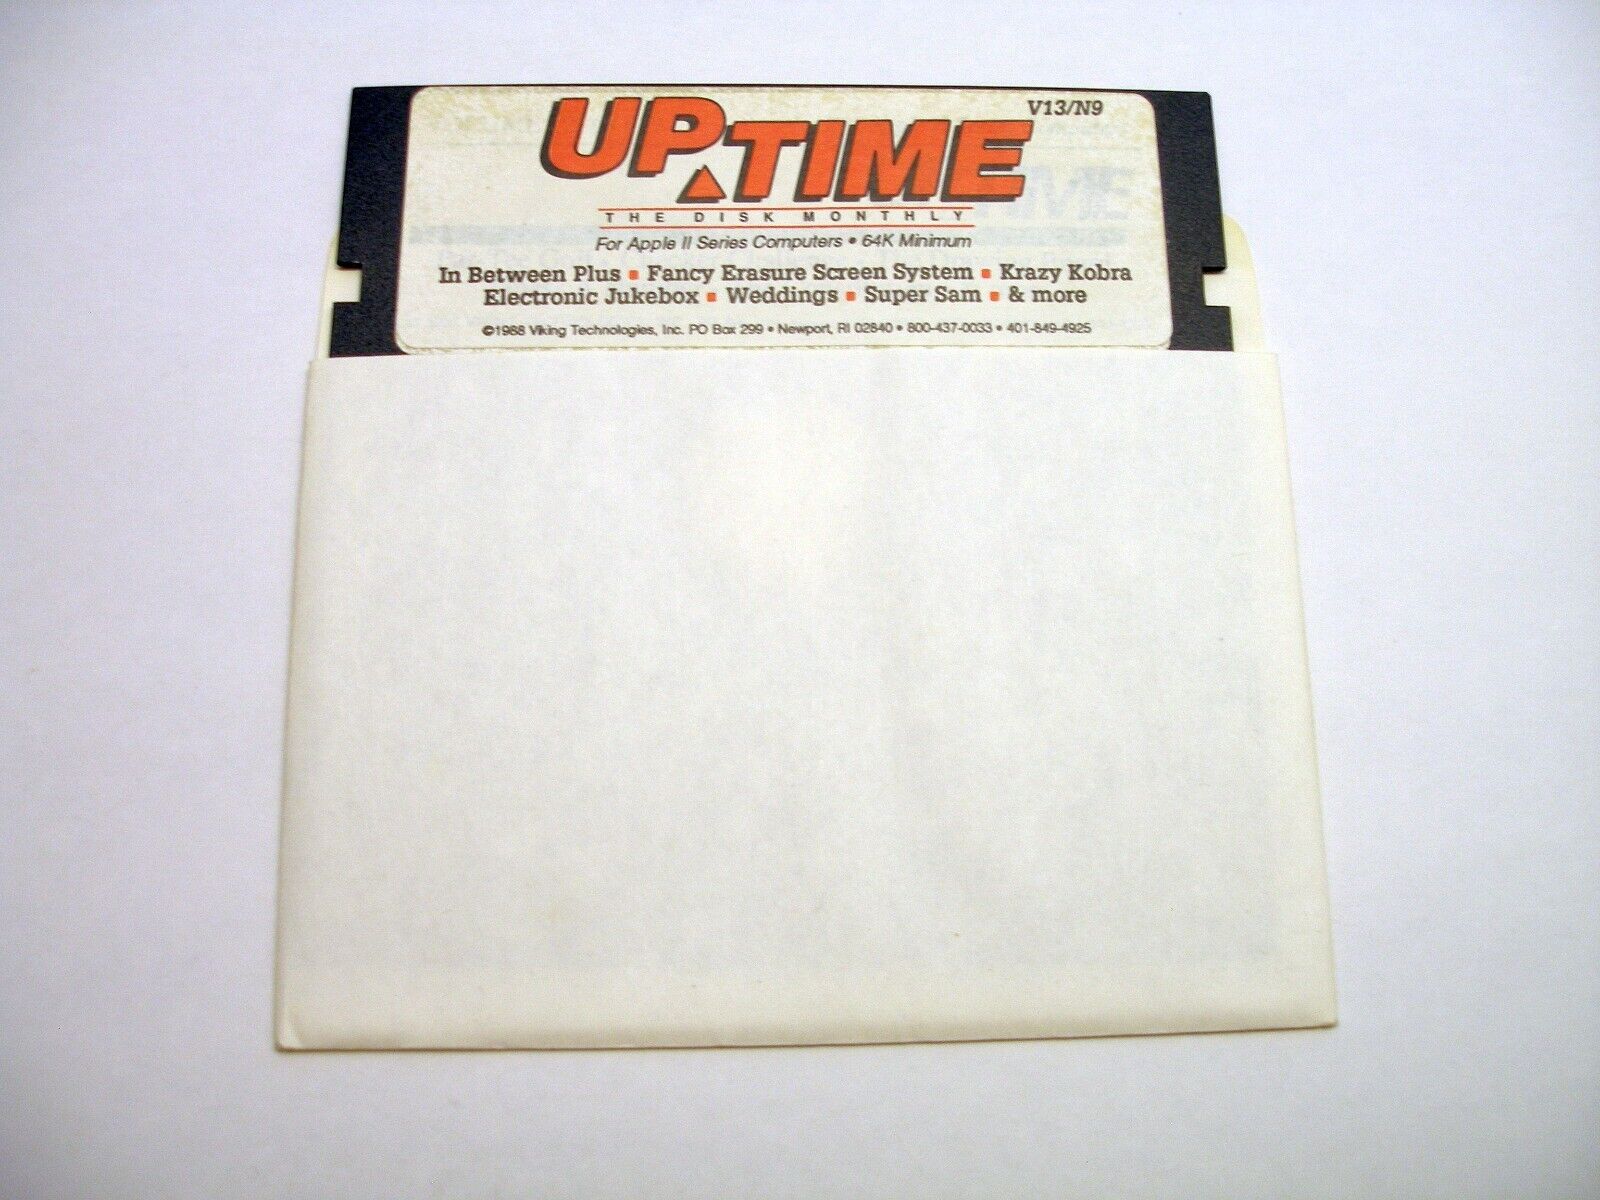 RARE 1987 Apple II Uptime Magazine with Krazy Kobra by John Romero